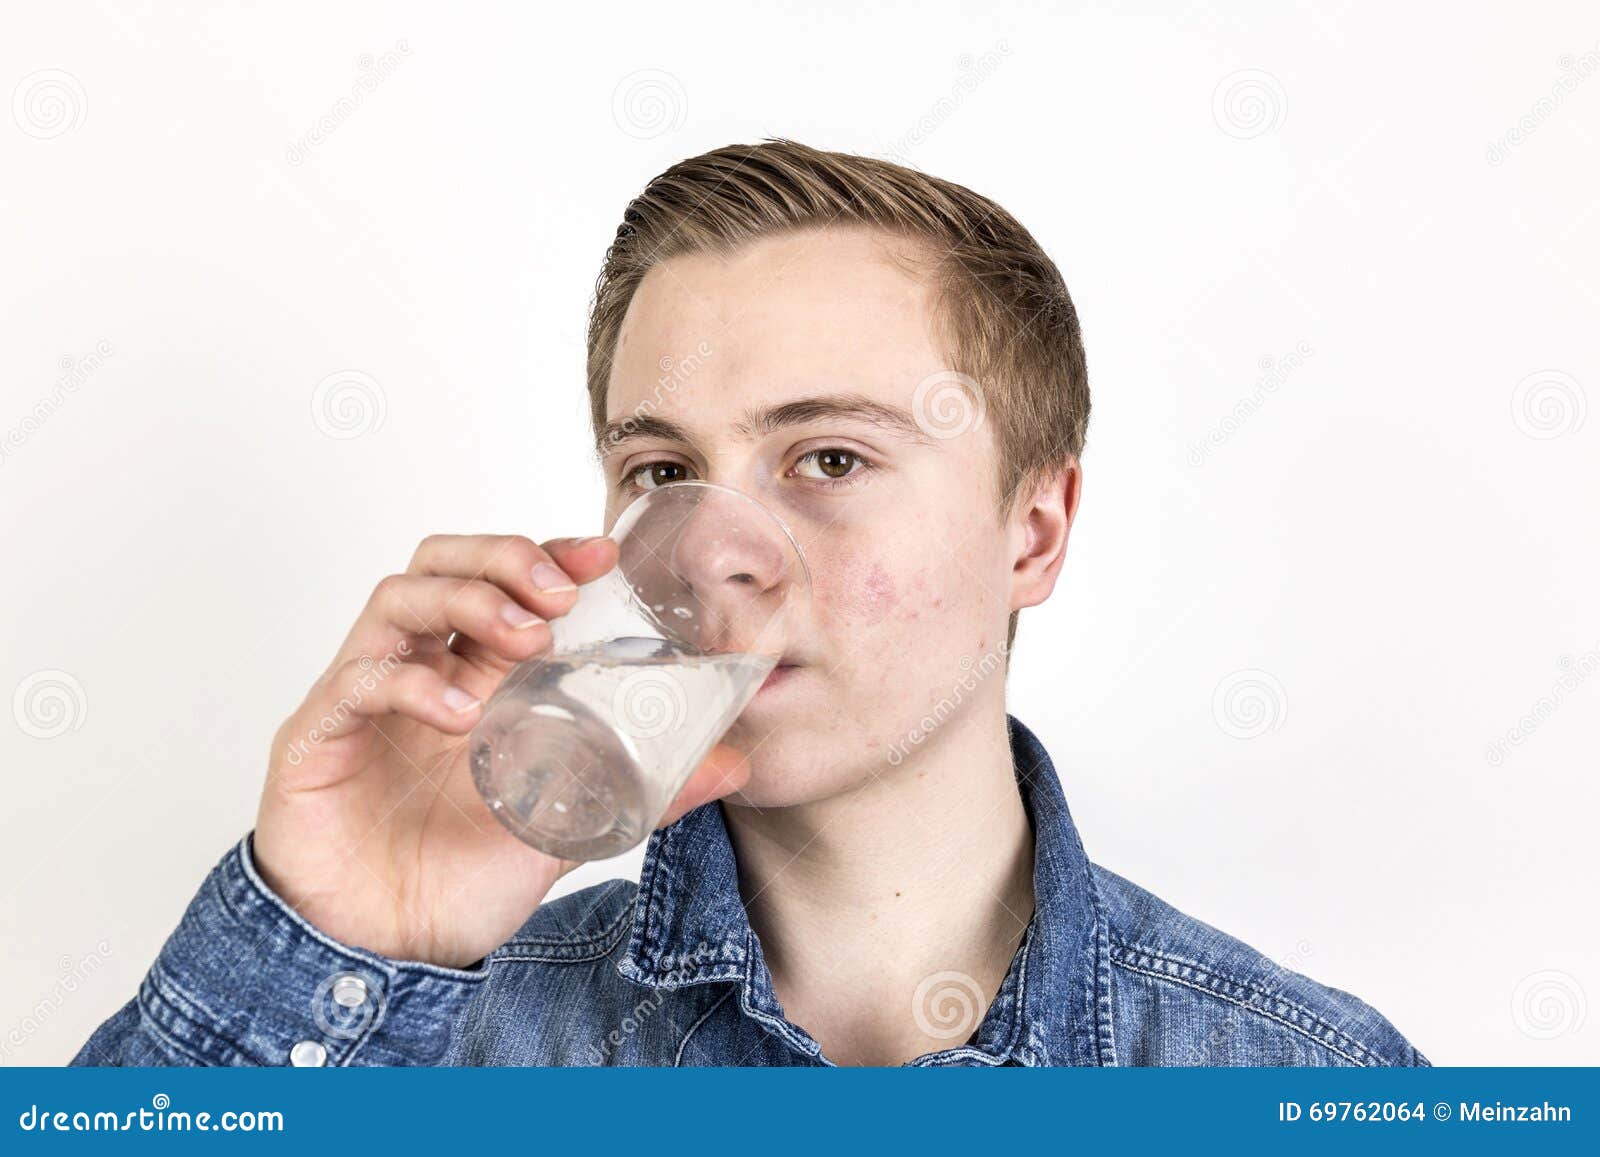 Teen boy drinking water Stock Photo by ©VaLiza 114884958